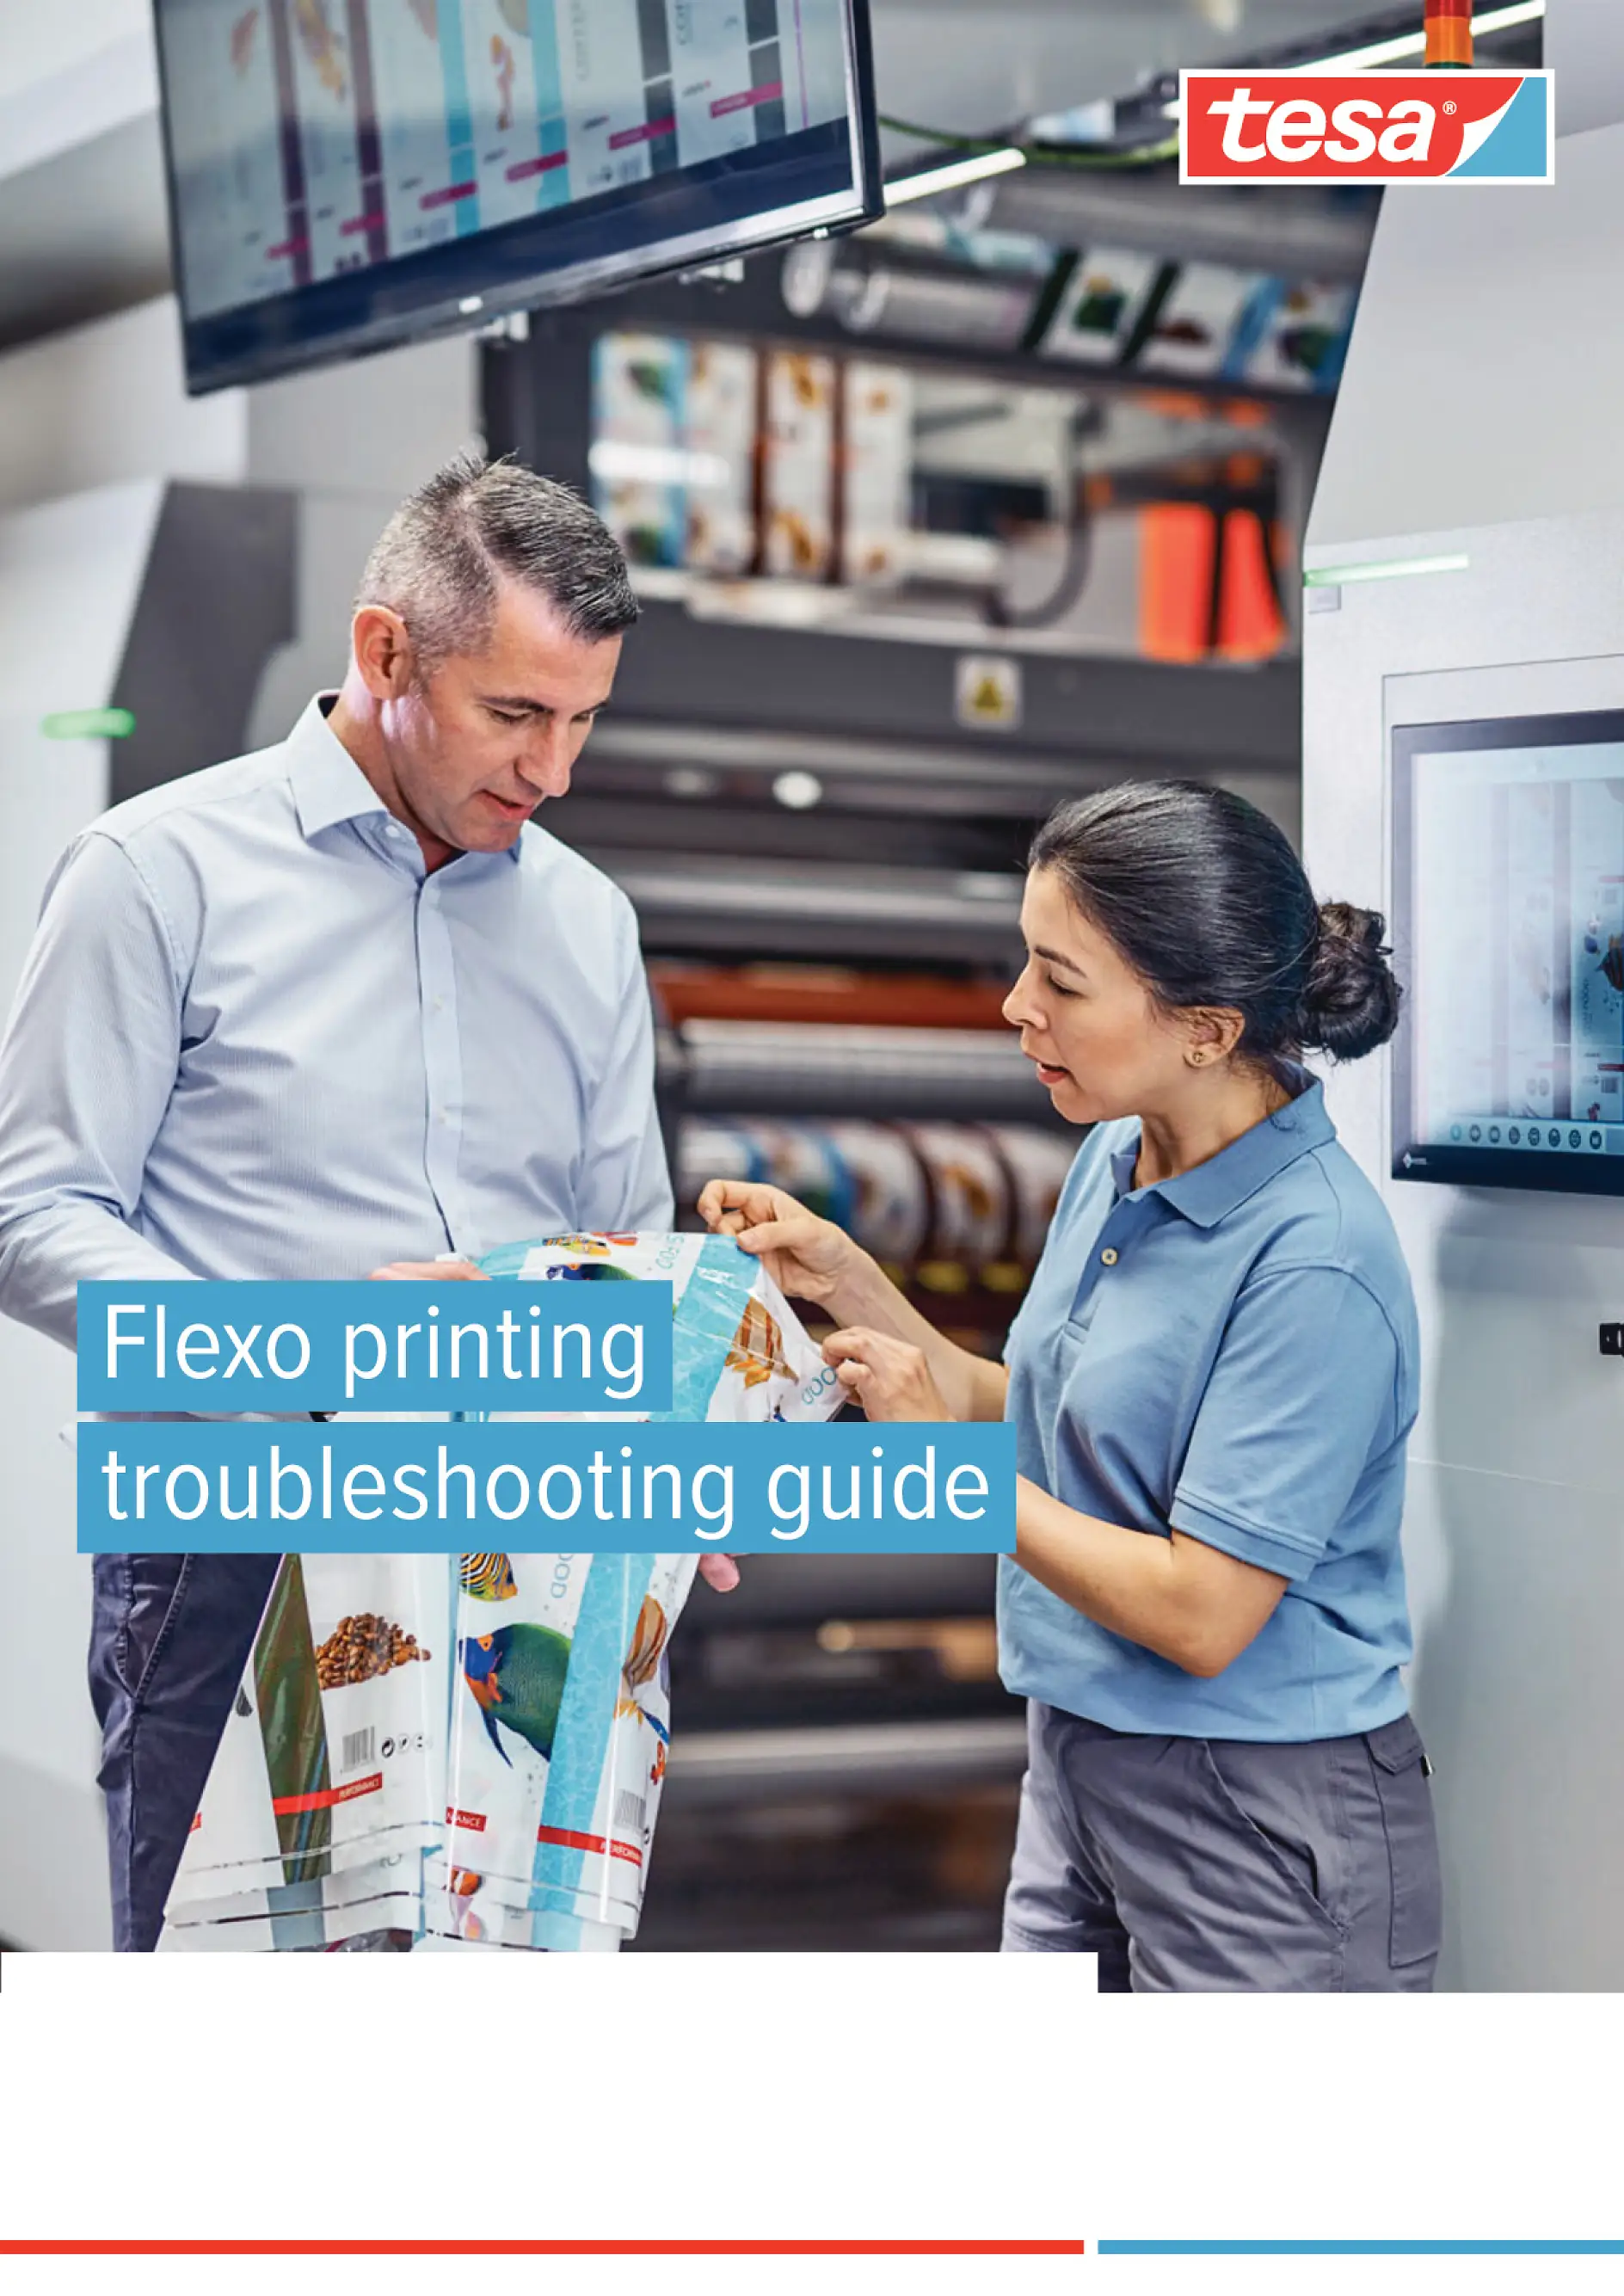 tesa flexo printing troubleshooting guide